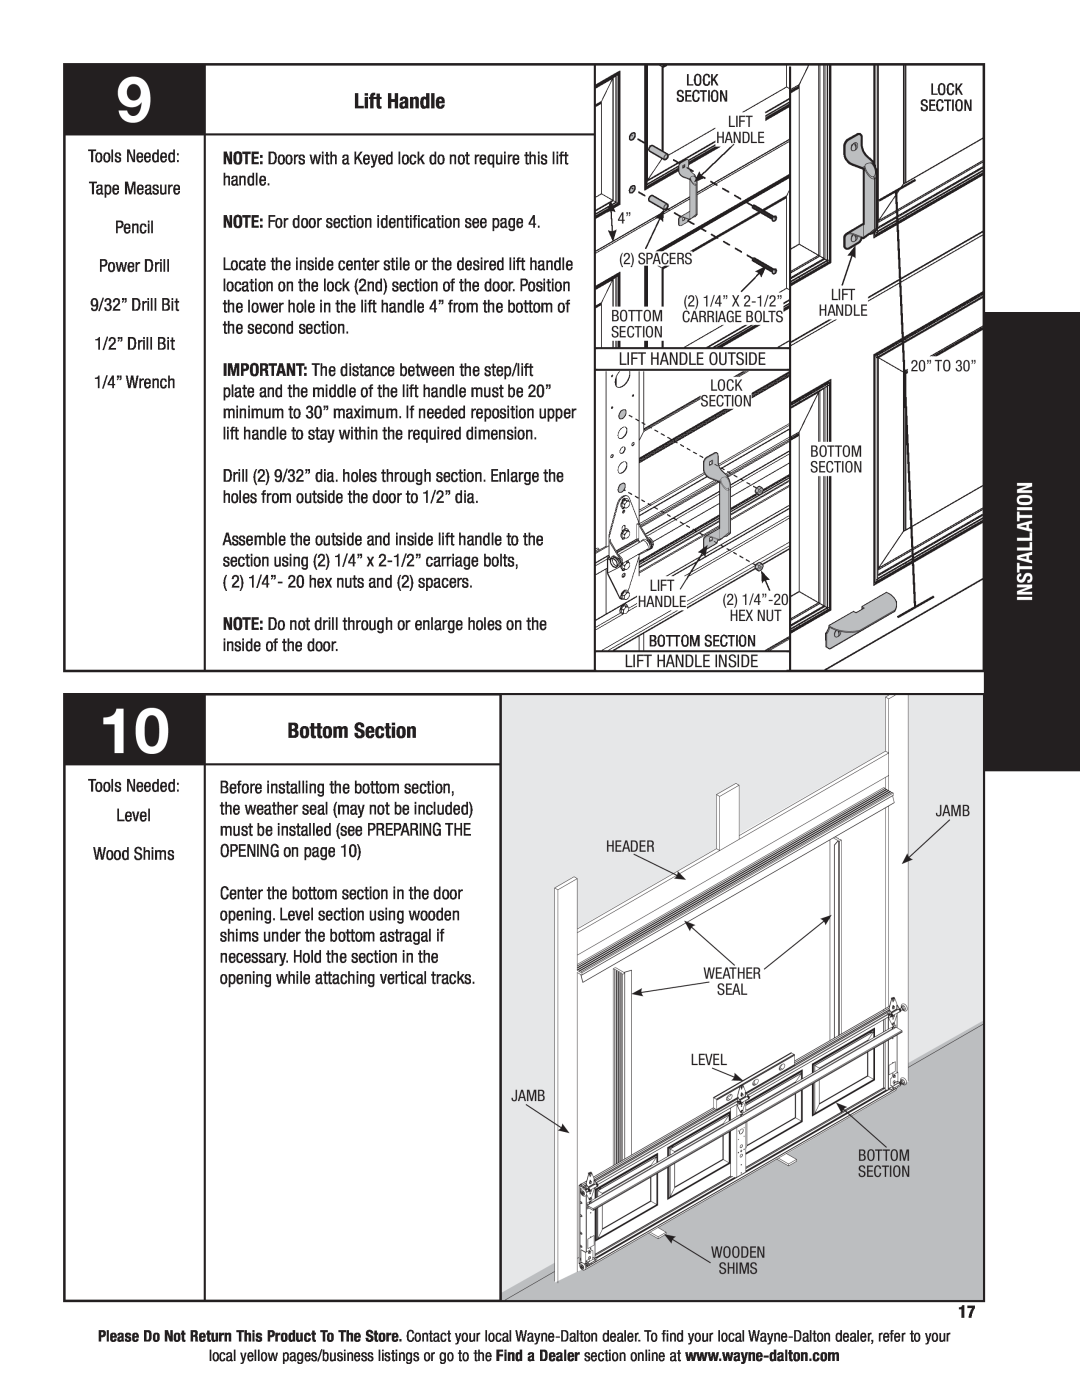 Wayne-Dalton 46 installation instructions Lift Handle, Installation, Bottom Section 